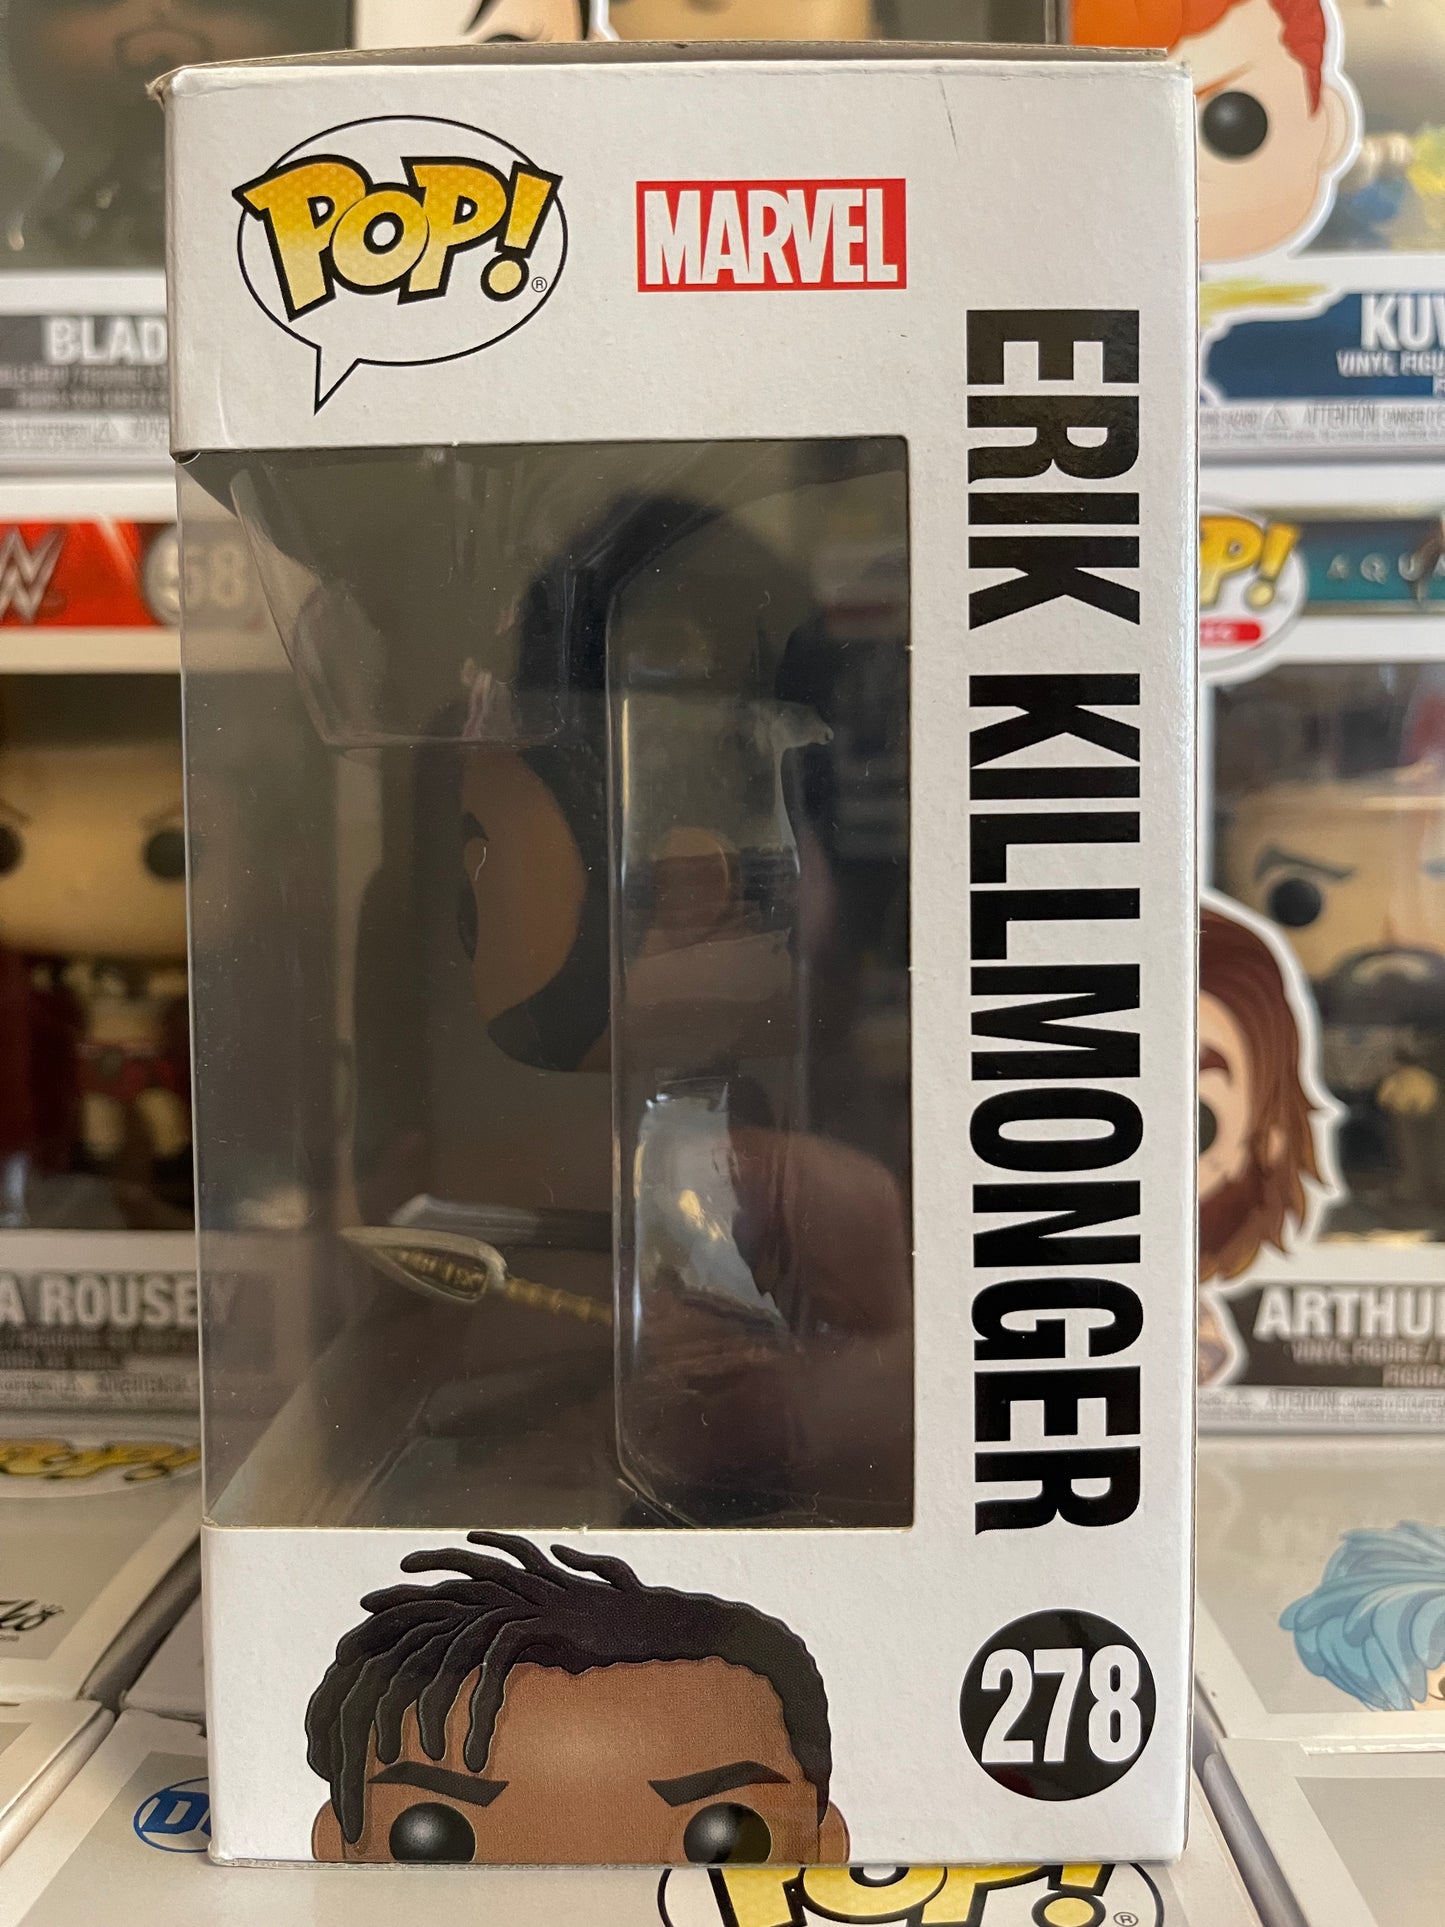 Marvel Black Panther - Erik Killmonger (278)